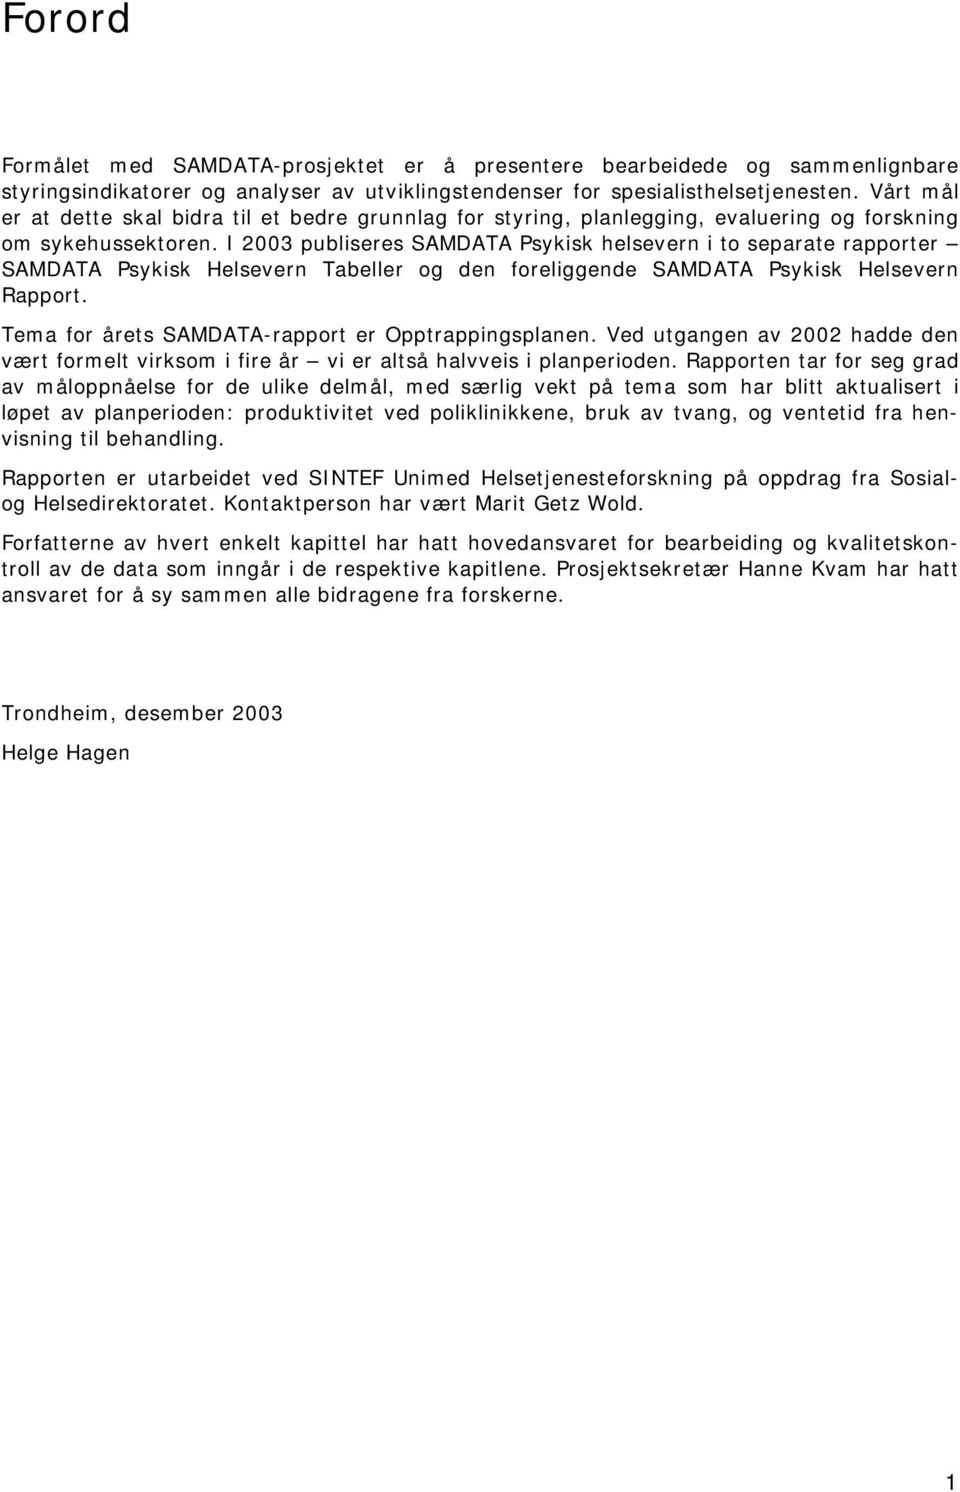 I 2003 publiseres SAMDATA Psykisk helsevern i to separate rapporter SAMDATA Psykisk Helsevern Tabeller og den foreliggende SAMDATA Psykisk Helsevern Rapport.